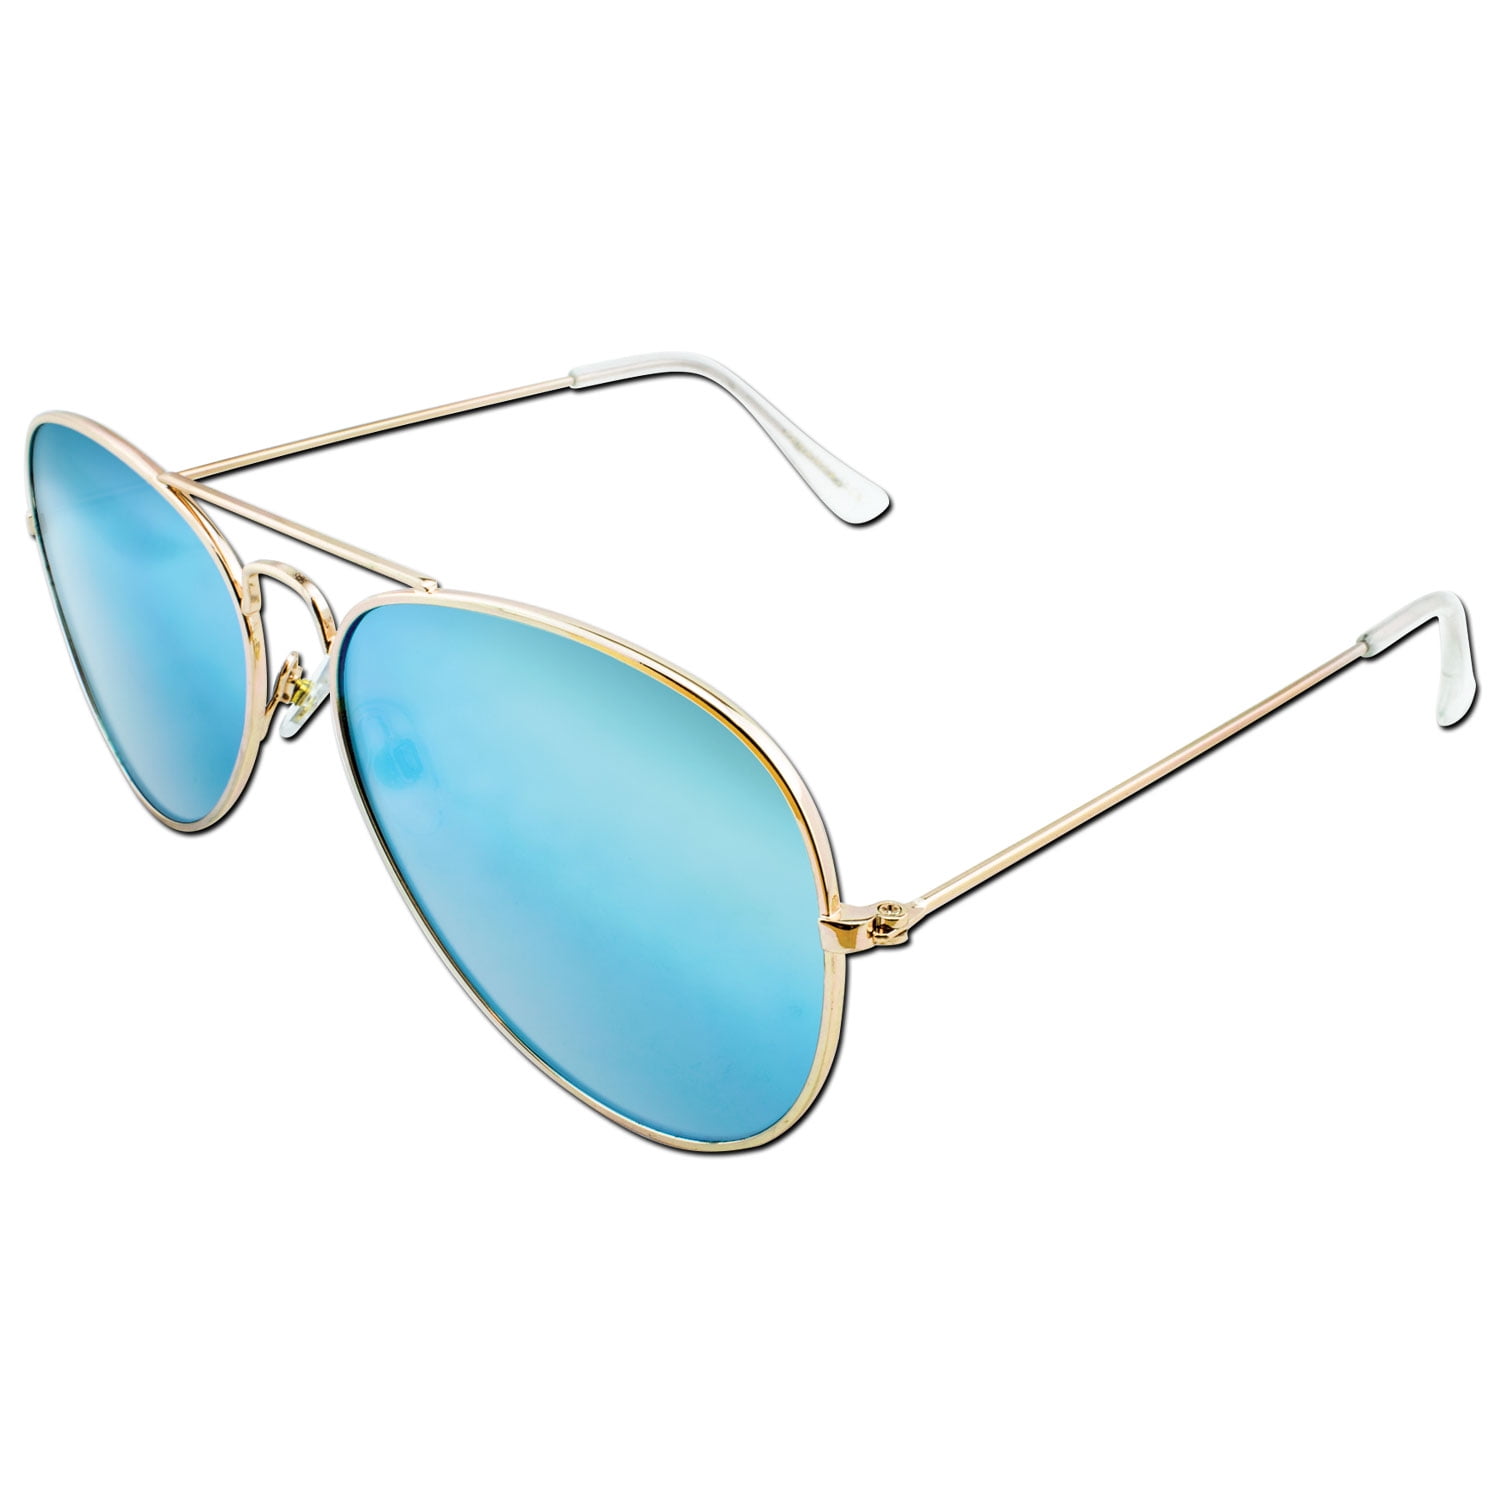 Beraadslagen verdrietig Goneryl Panama Jack Flat Lens Aviator Sunglasses (Gold/Turquoise) - Walmart.com